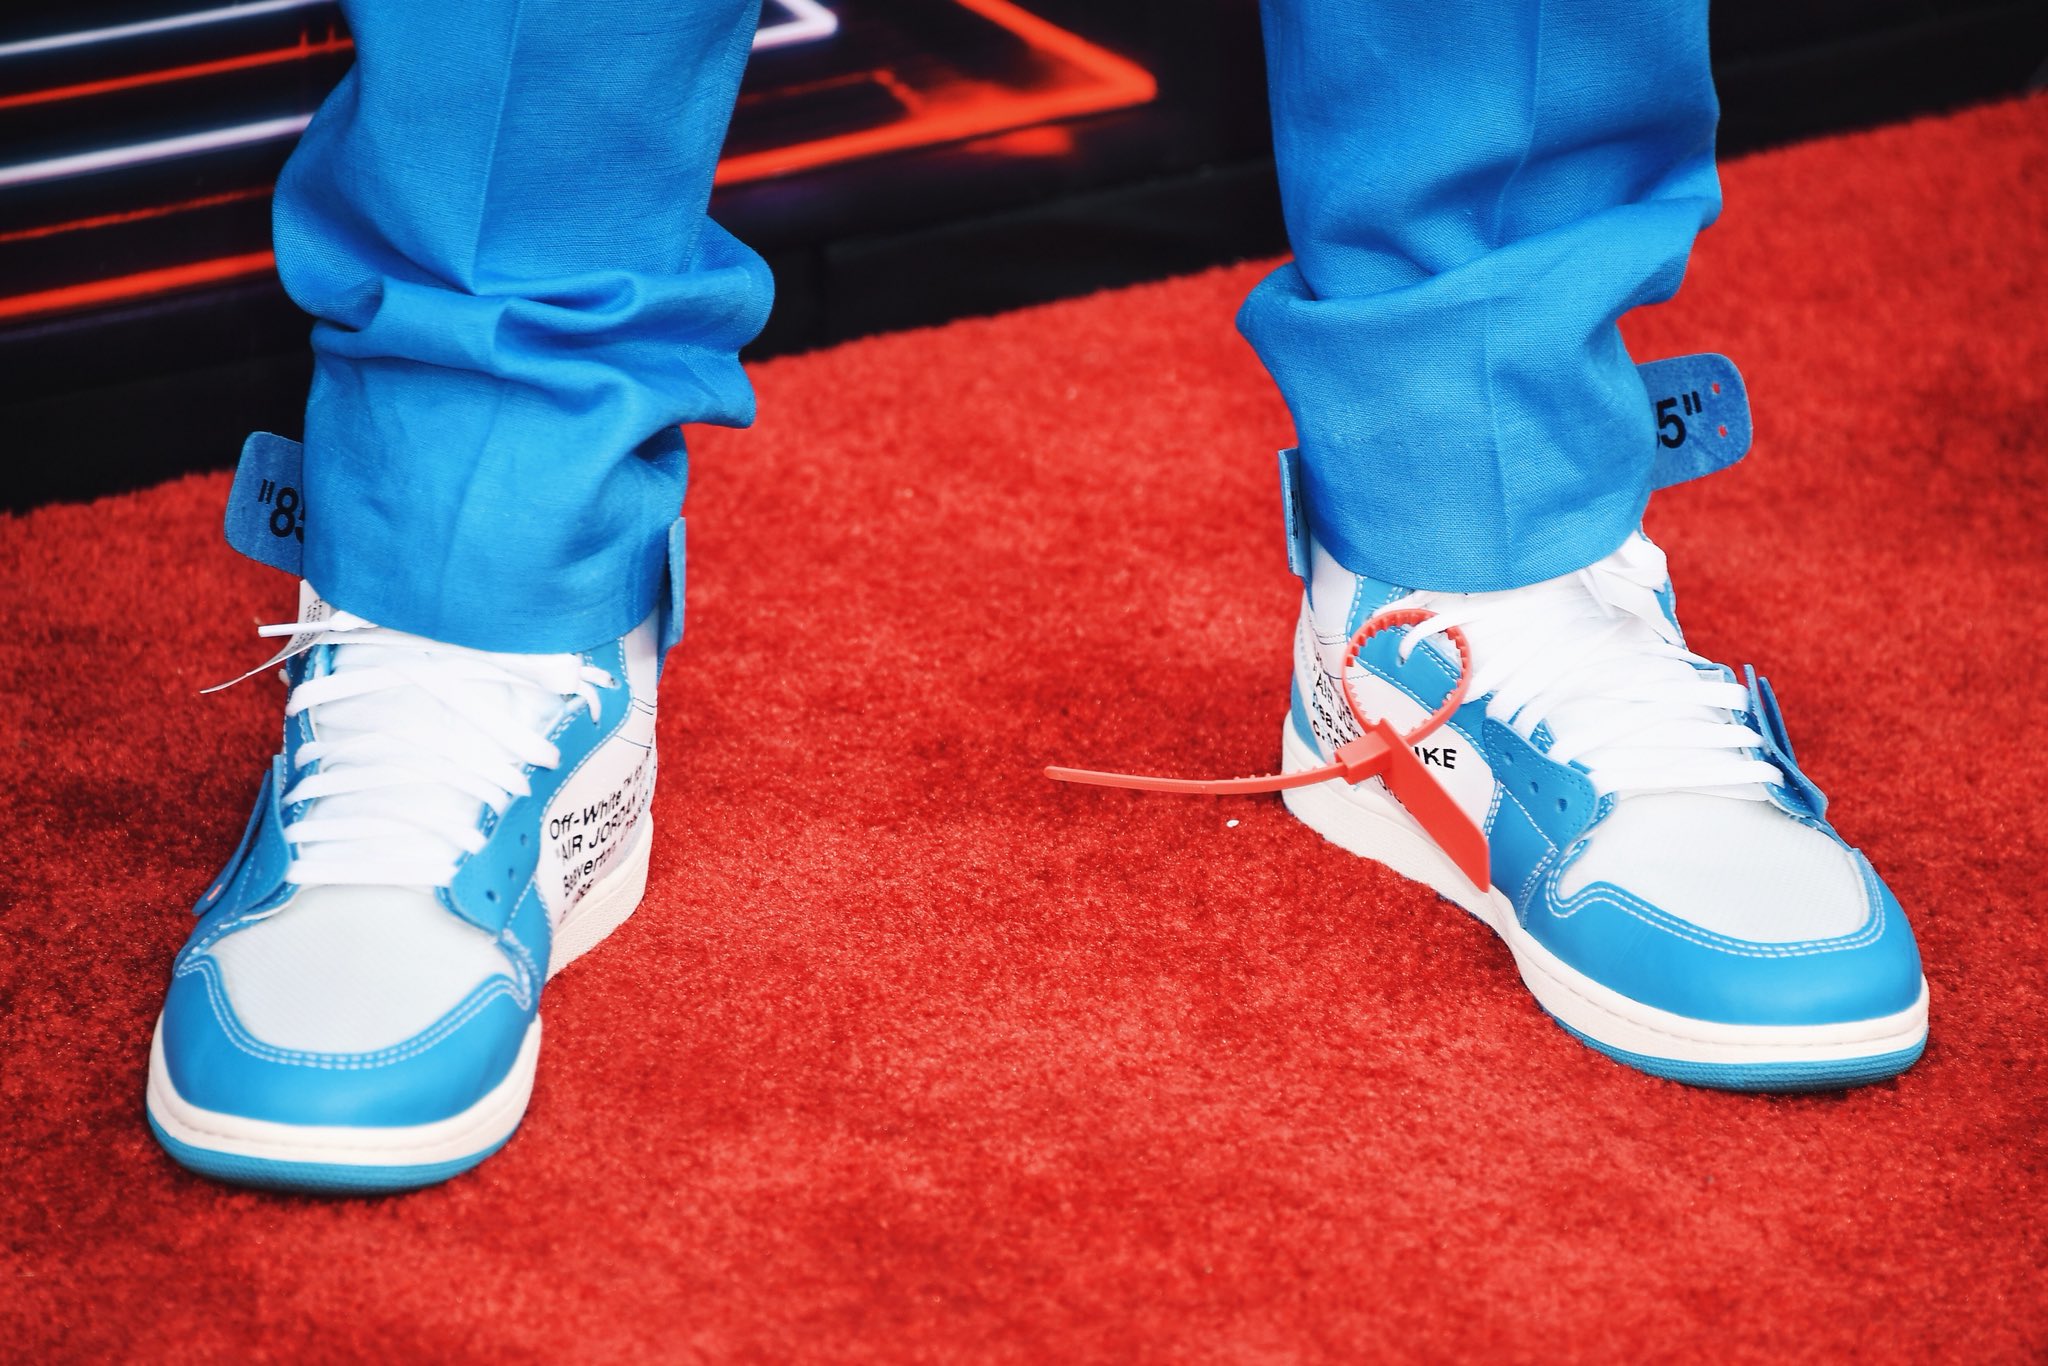 B/R Kicks on Twitter: ".@djkhaled wearing the Air Jordan 1 at the 2018 Billboard Music Awards / Twitter